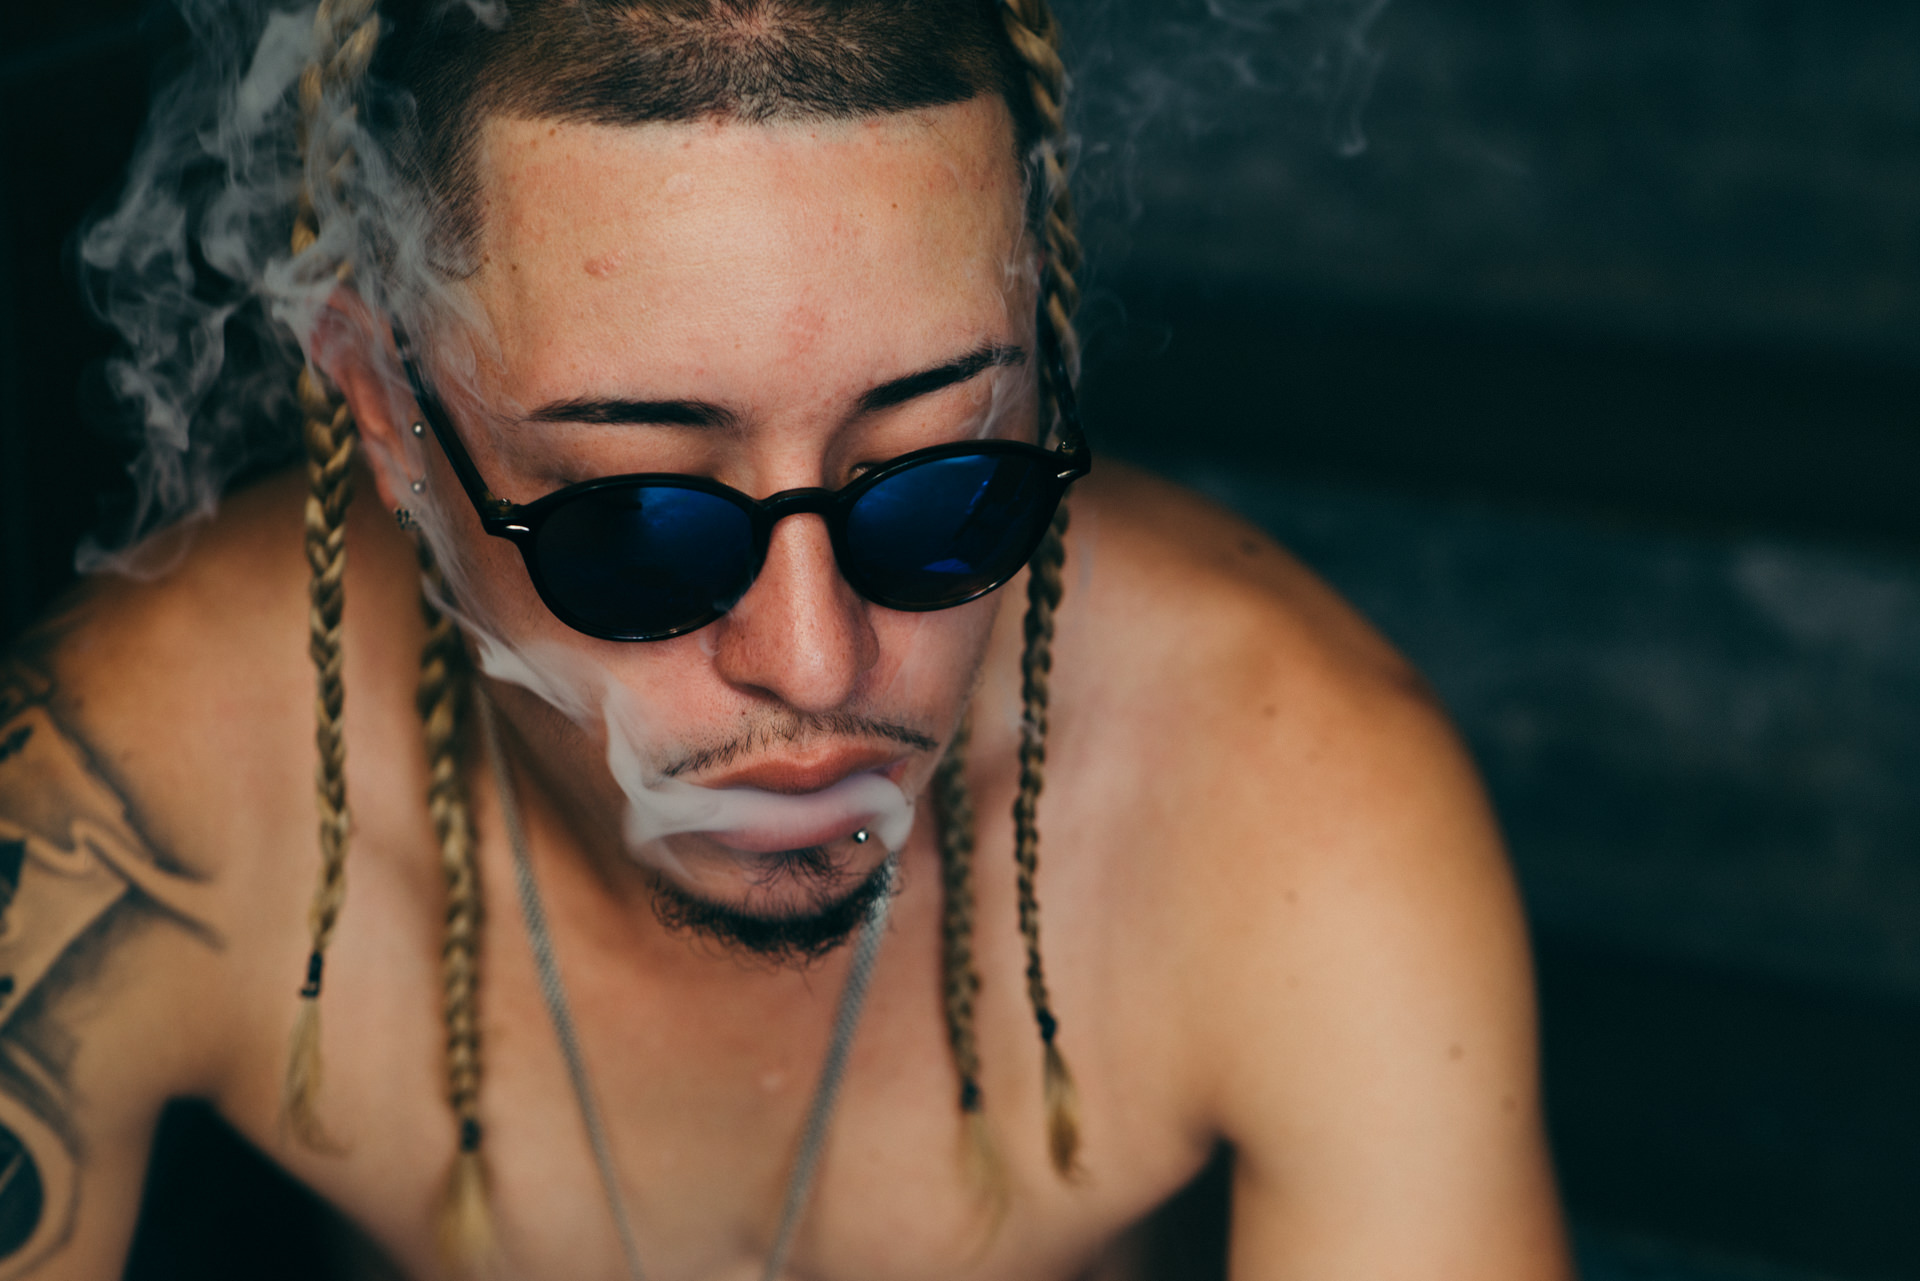 Johny, South London rapper – portraits photography